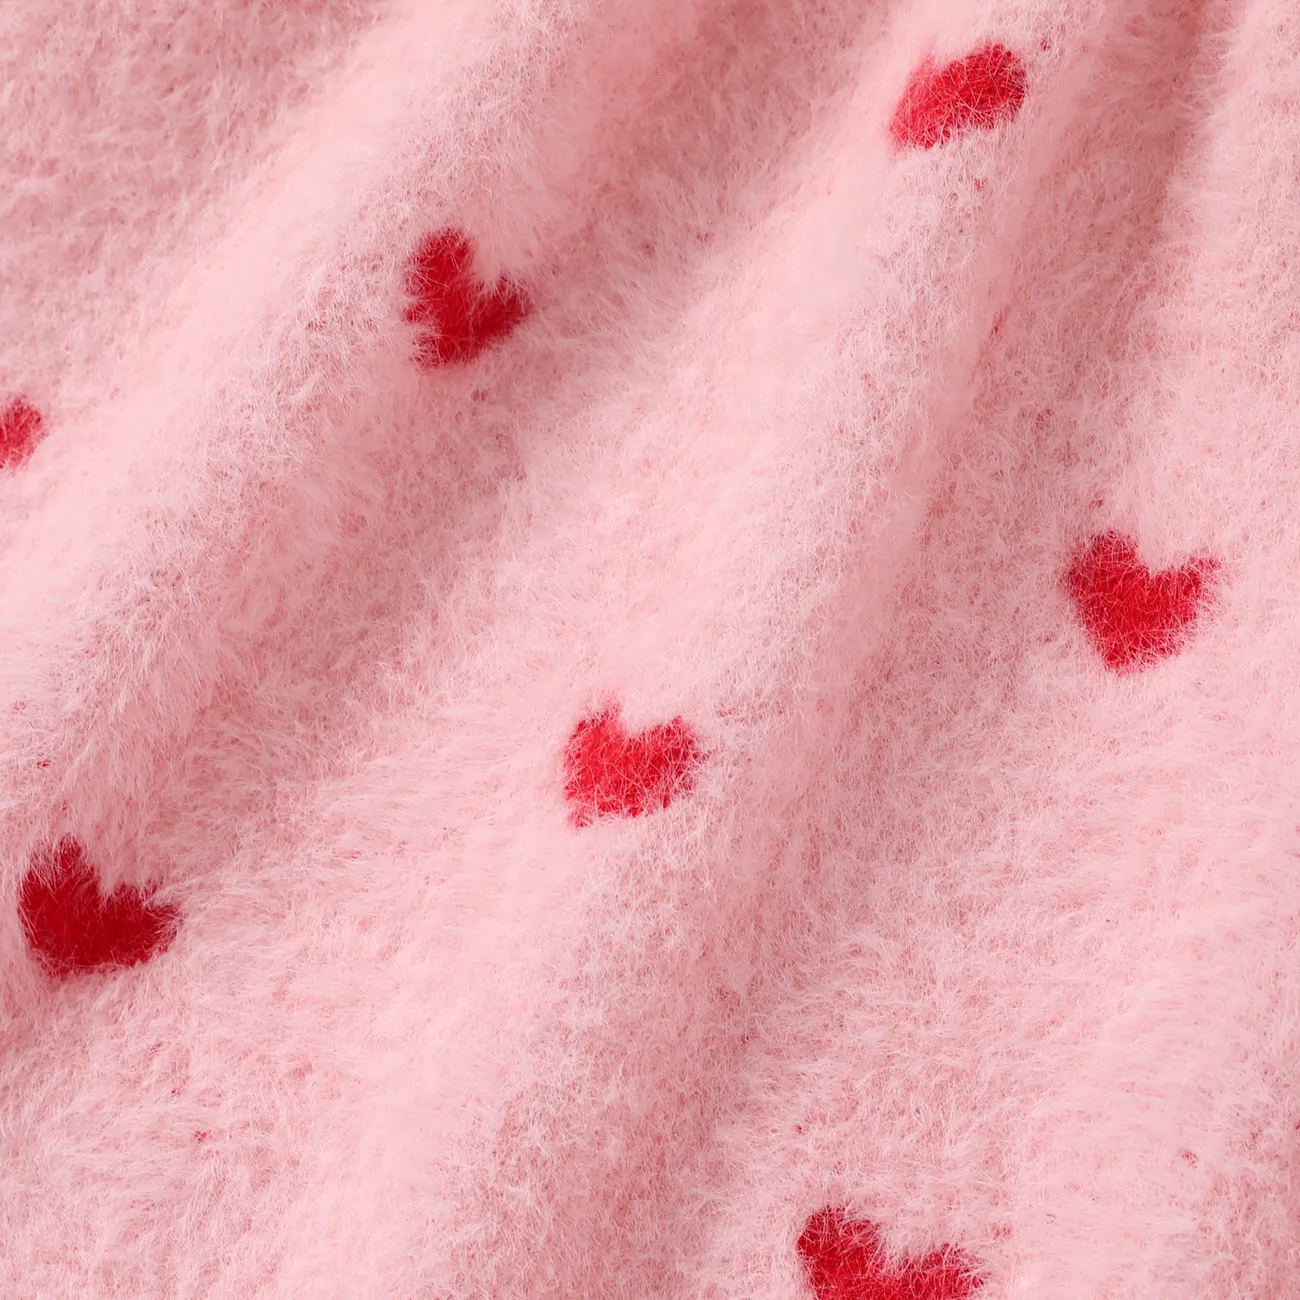 Baby/Toddler Girl Sweet Heart-shaped Sweater Dress Pink big image 1